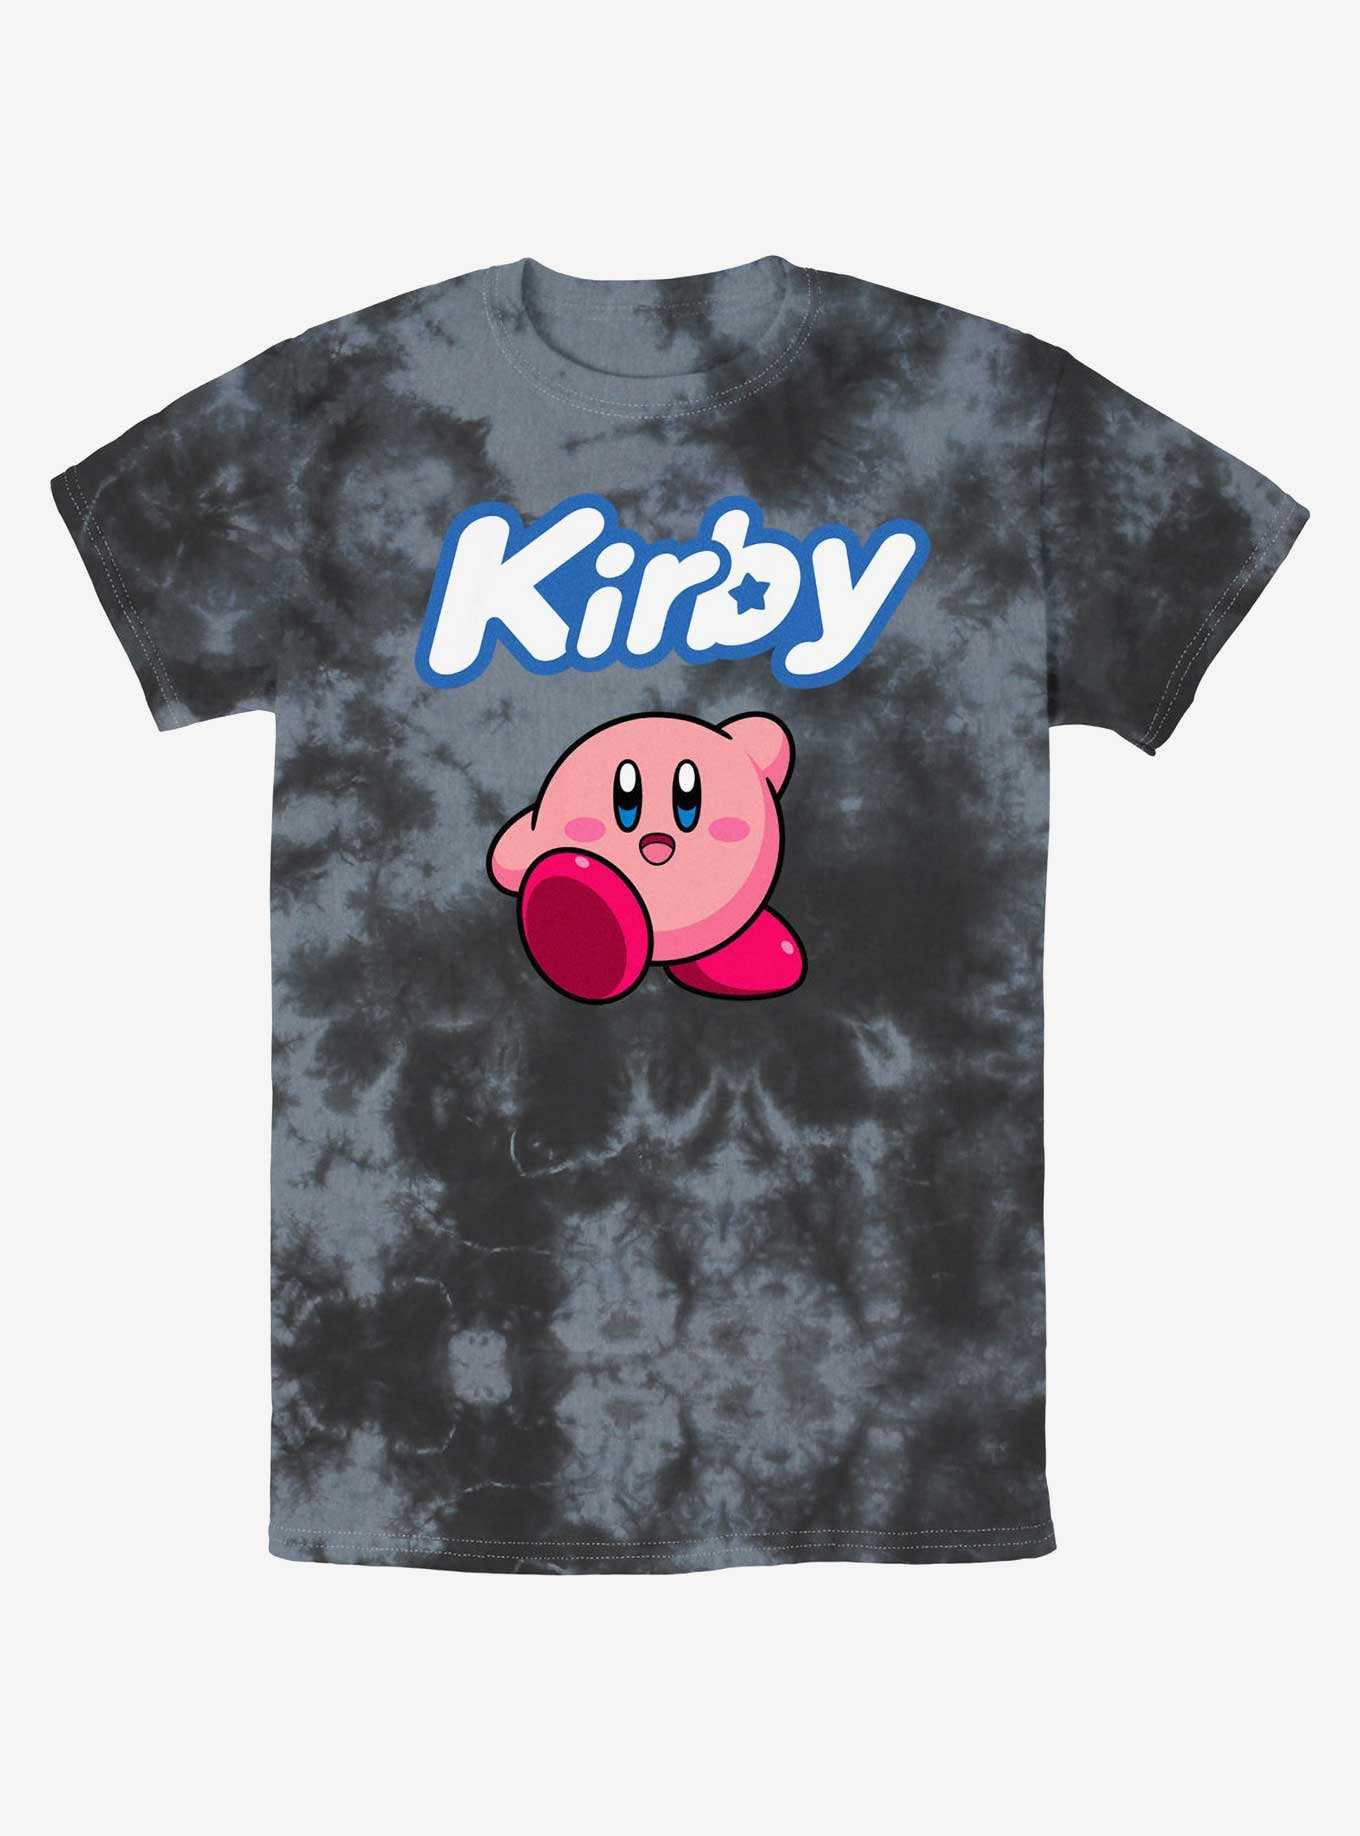 Kirby Pose Tie-Dye T-Shirt, , hi-res